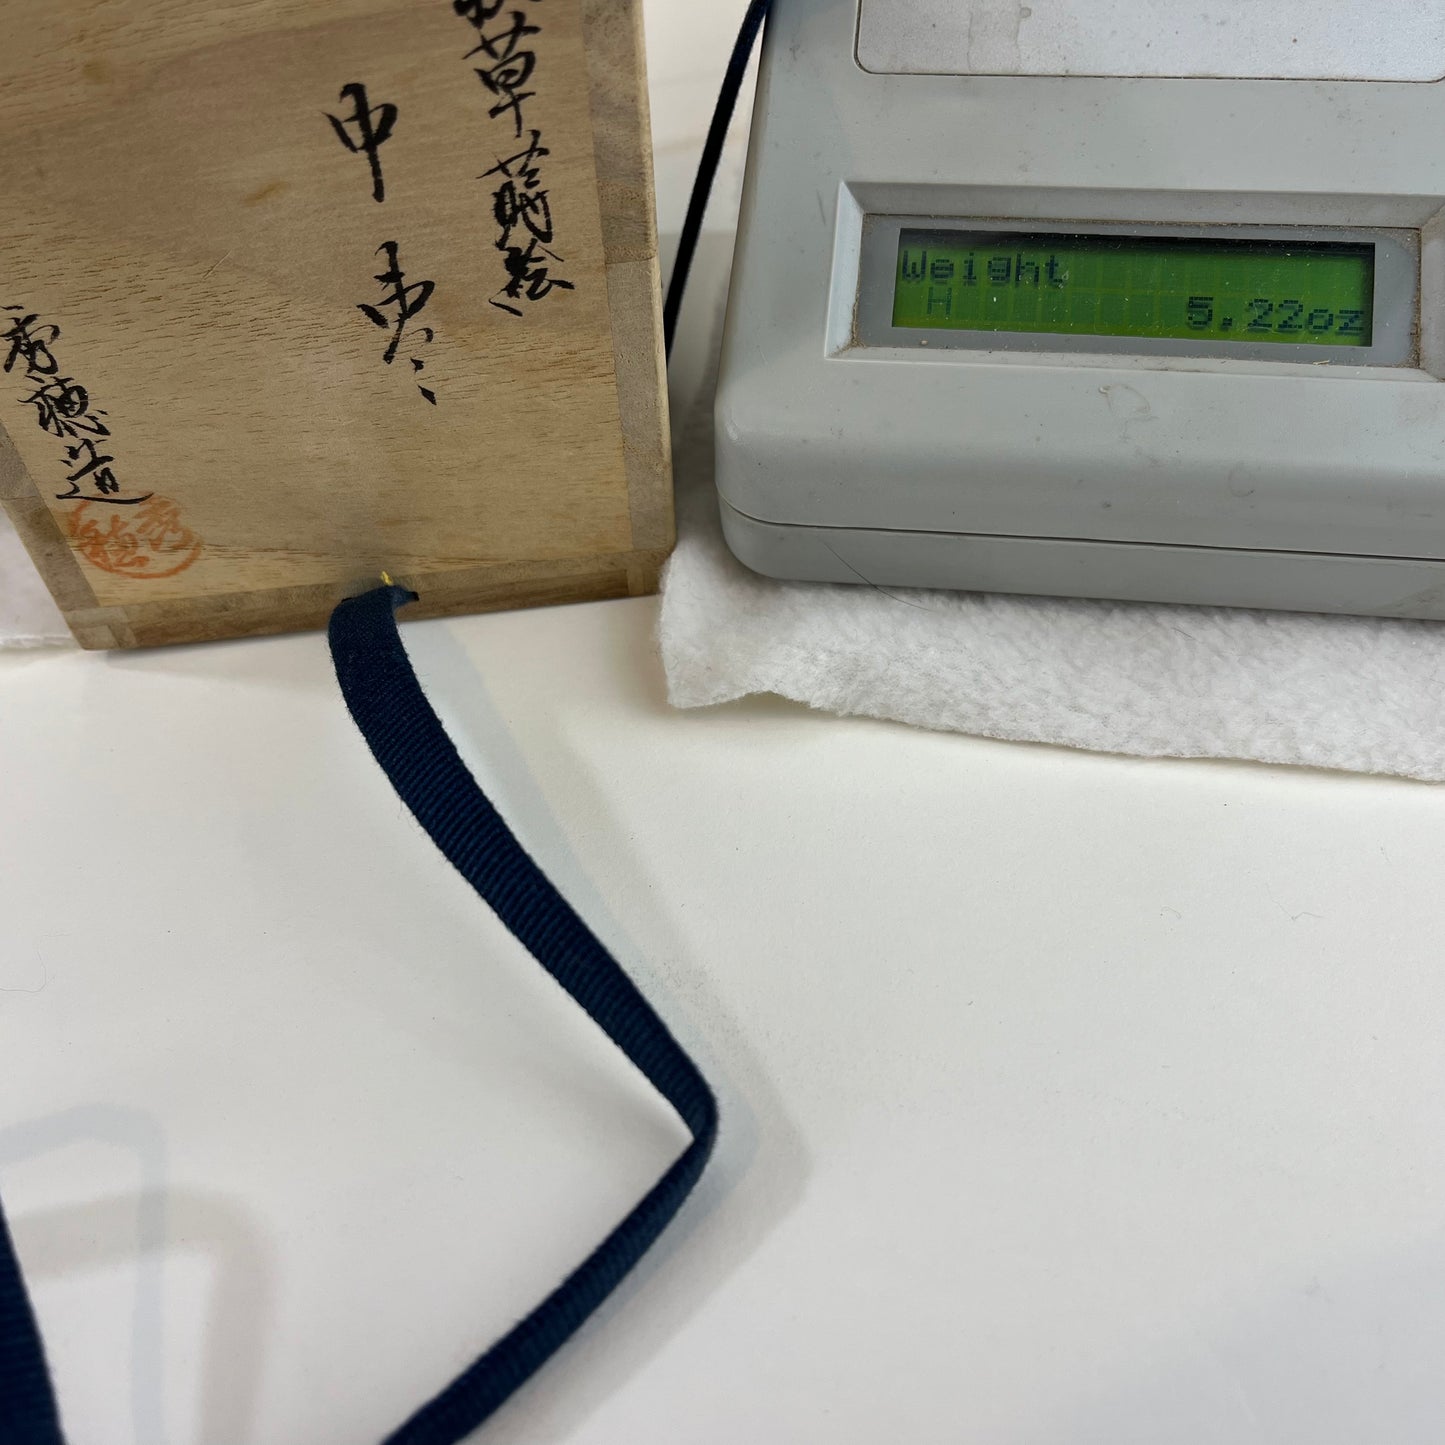 Vintage Japanese Baigetsu Natsume Tea Ceremony Caddy Signed 岡本 2.5”